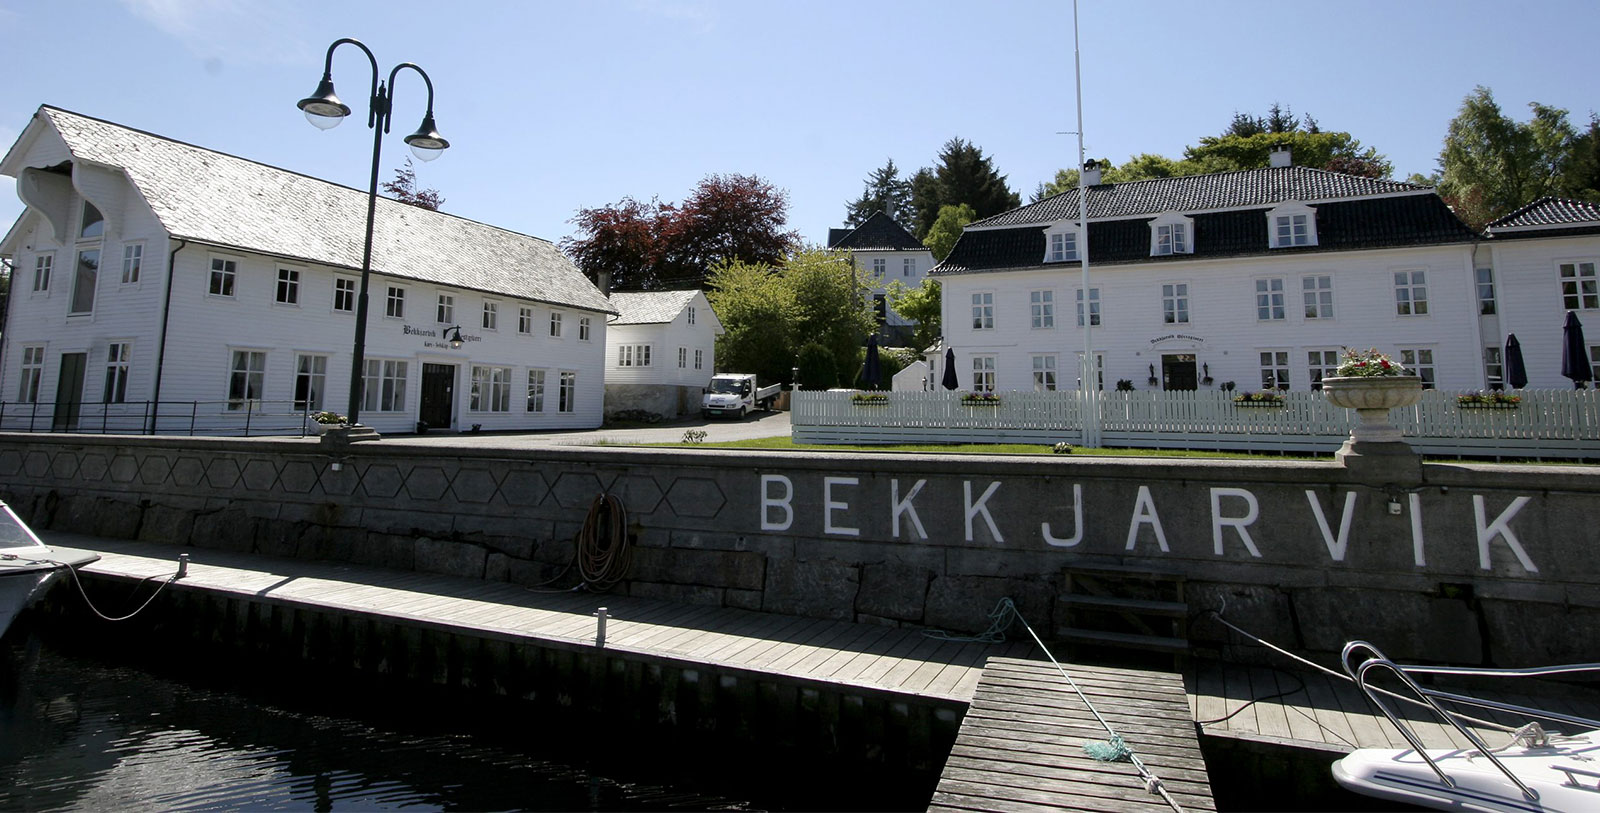 Image of hotel exterior Bekkjarvik Gjestgiveri, 1700s, Member of Historic Hotels Worldwide, in Norway, Overview